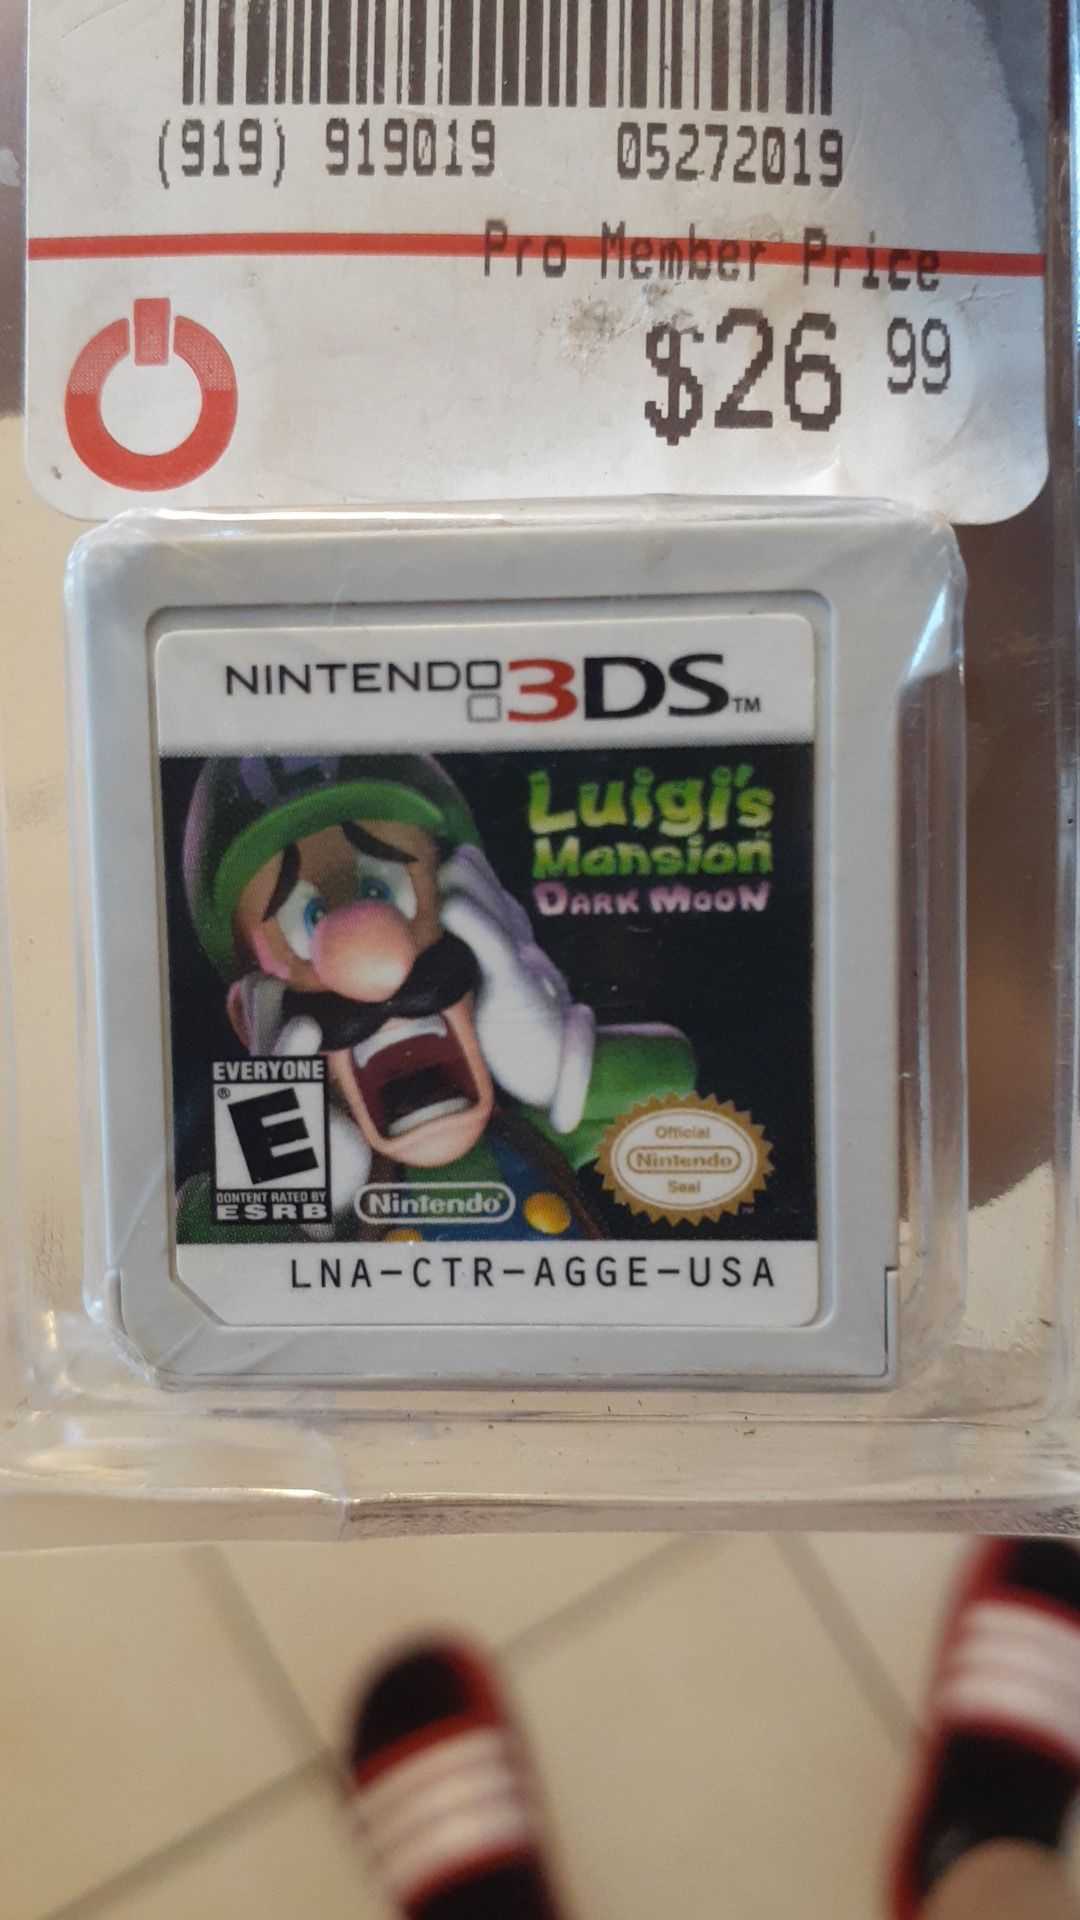 nintendo 3ds Luigi's Mansion Dark Moon $25